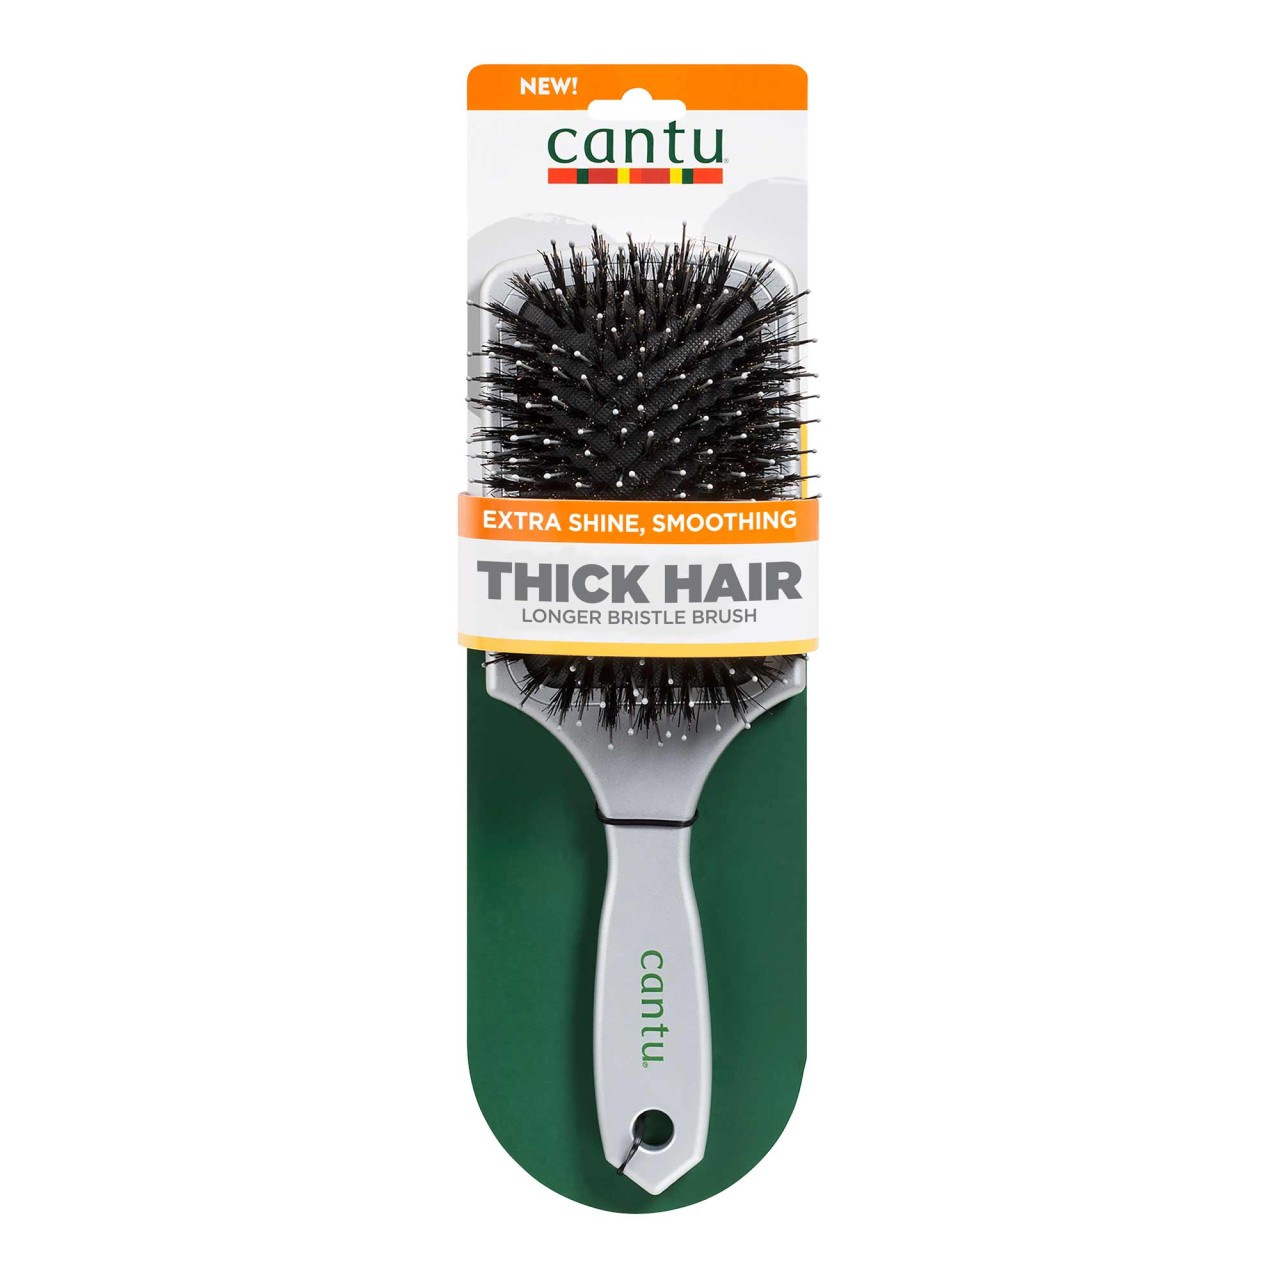 cantu - Thick Hair Longer Brist Brush - 